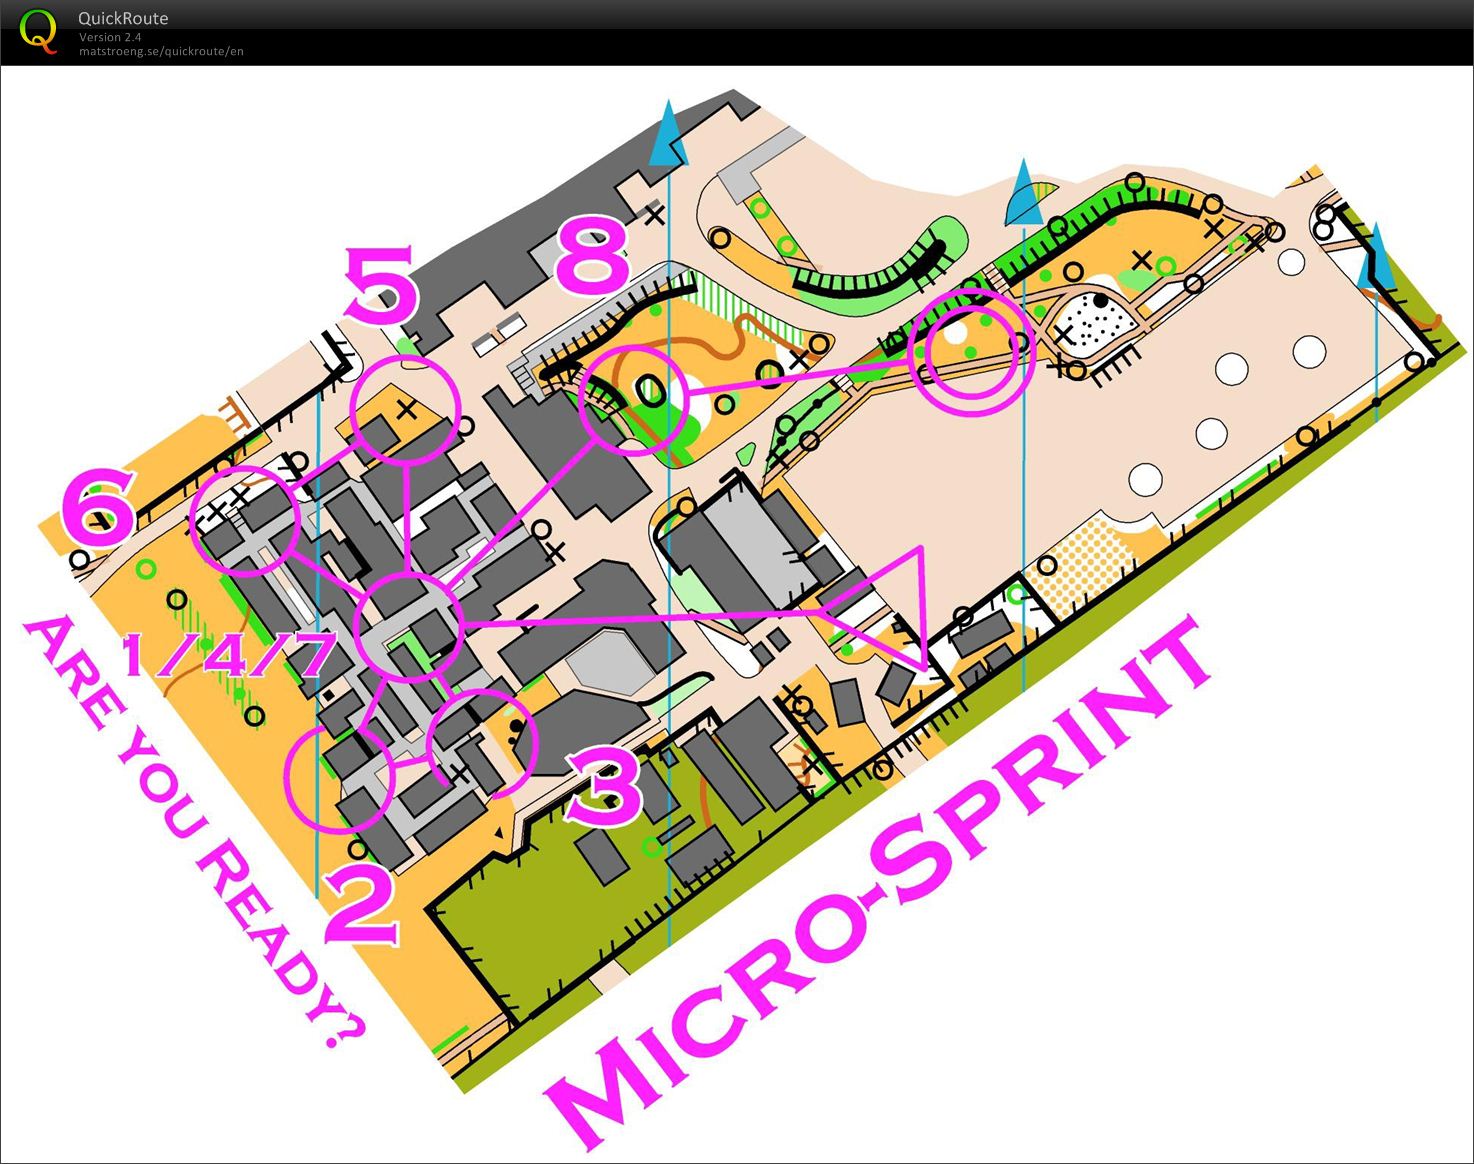 Matts MicroSprint (31.01.2012)